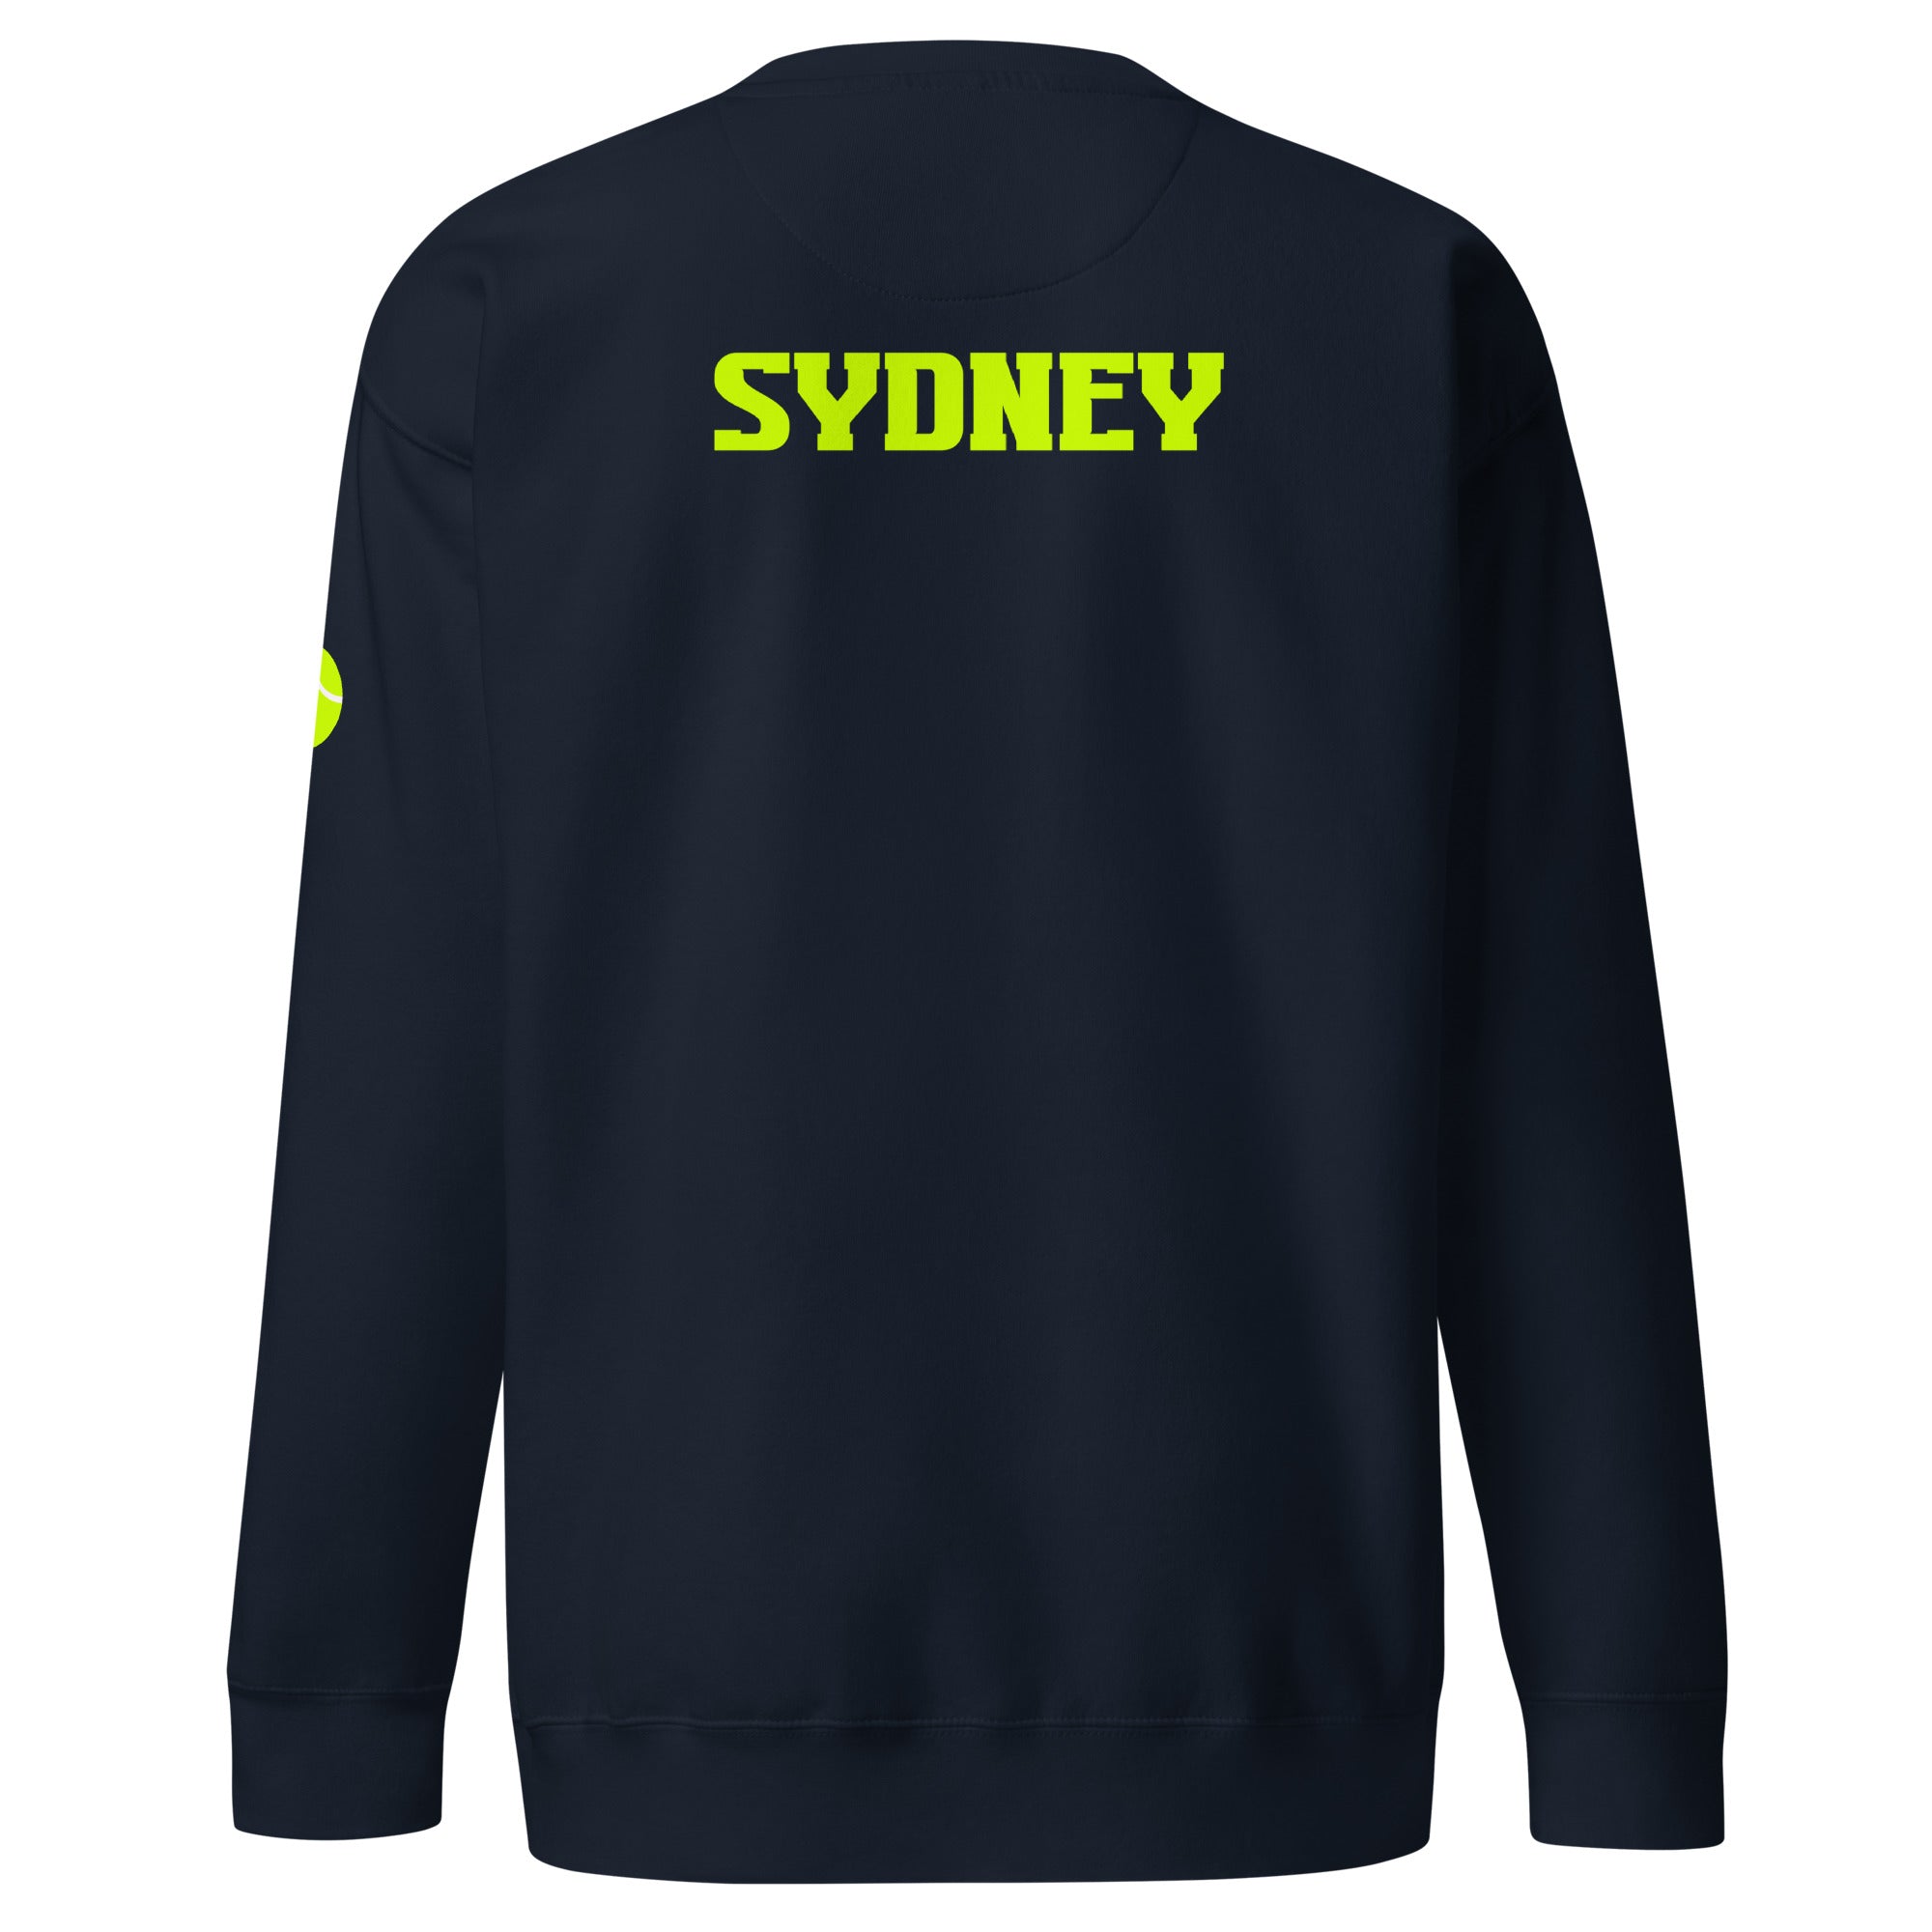 Unisex Premium Sweatshirt - Tennis Masters Sydney - GRAPHIC T-SHIRTS